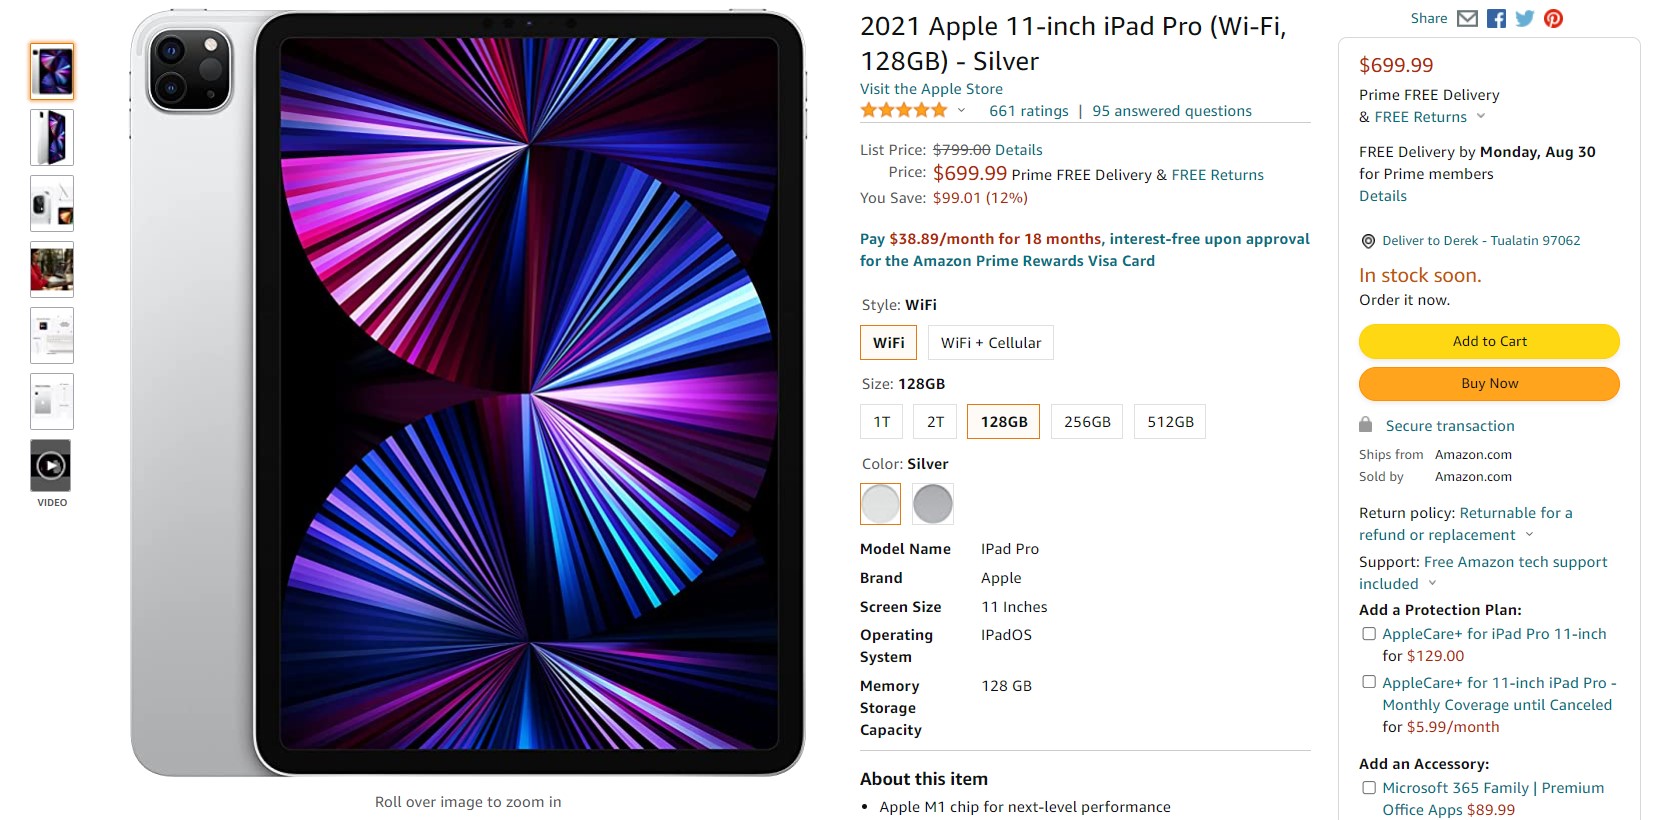 2021 Apple 11-inch iPad Pro Amazon Offer